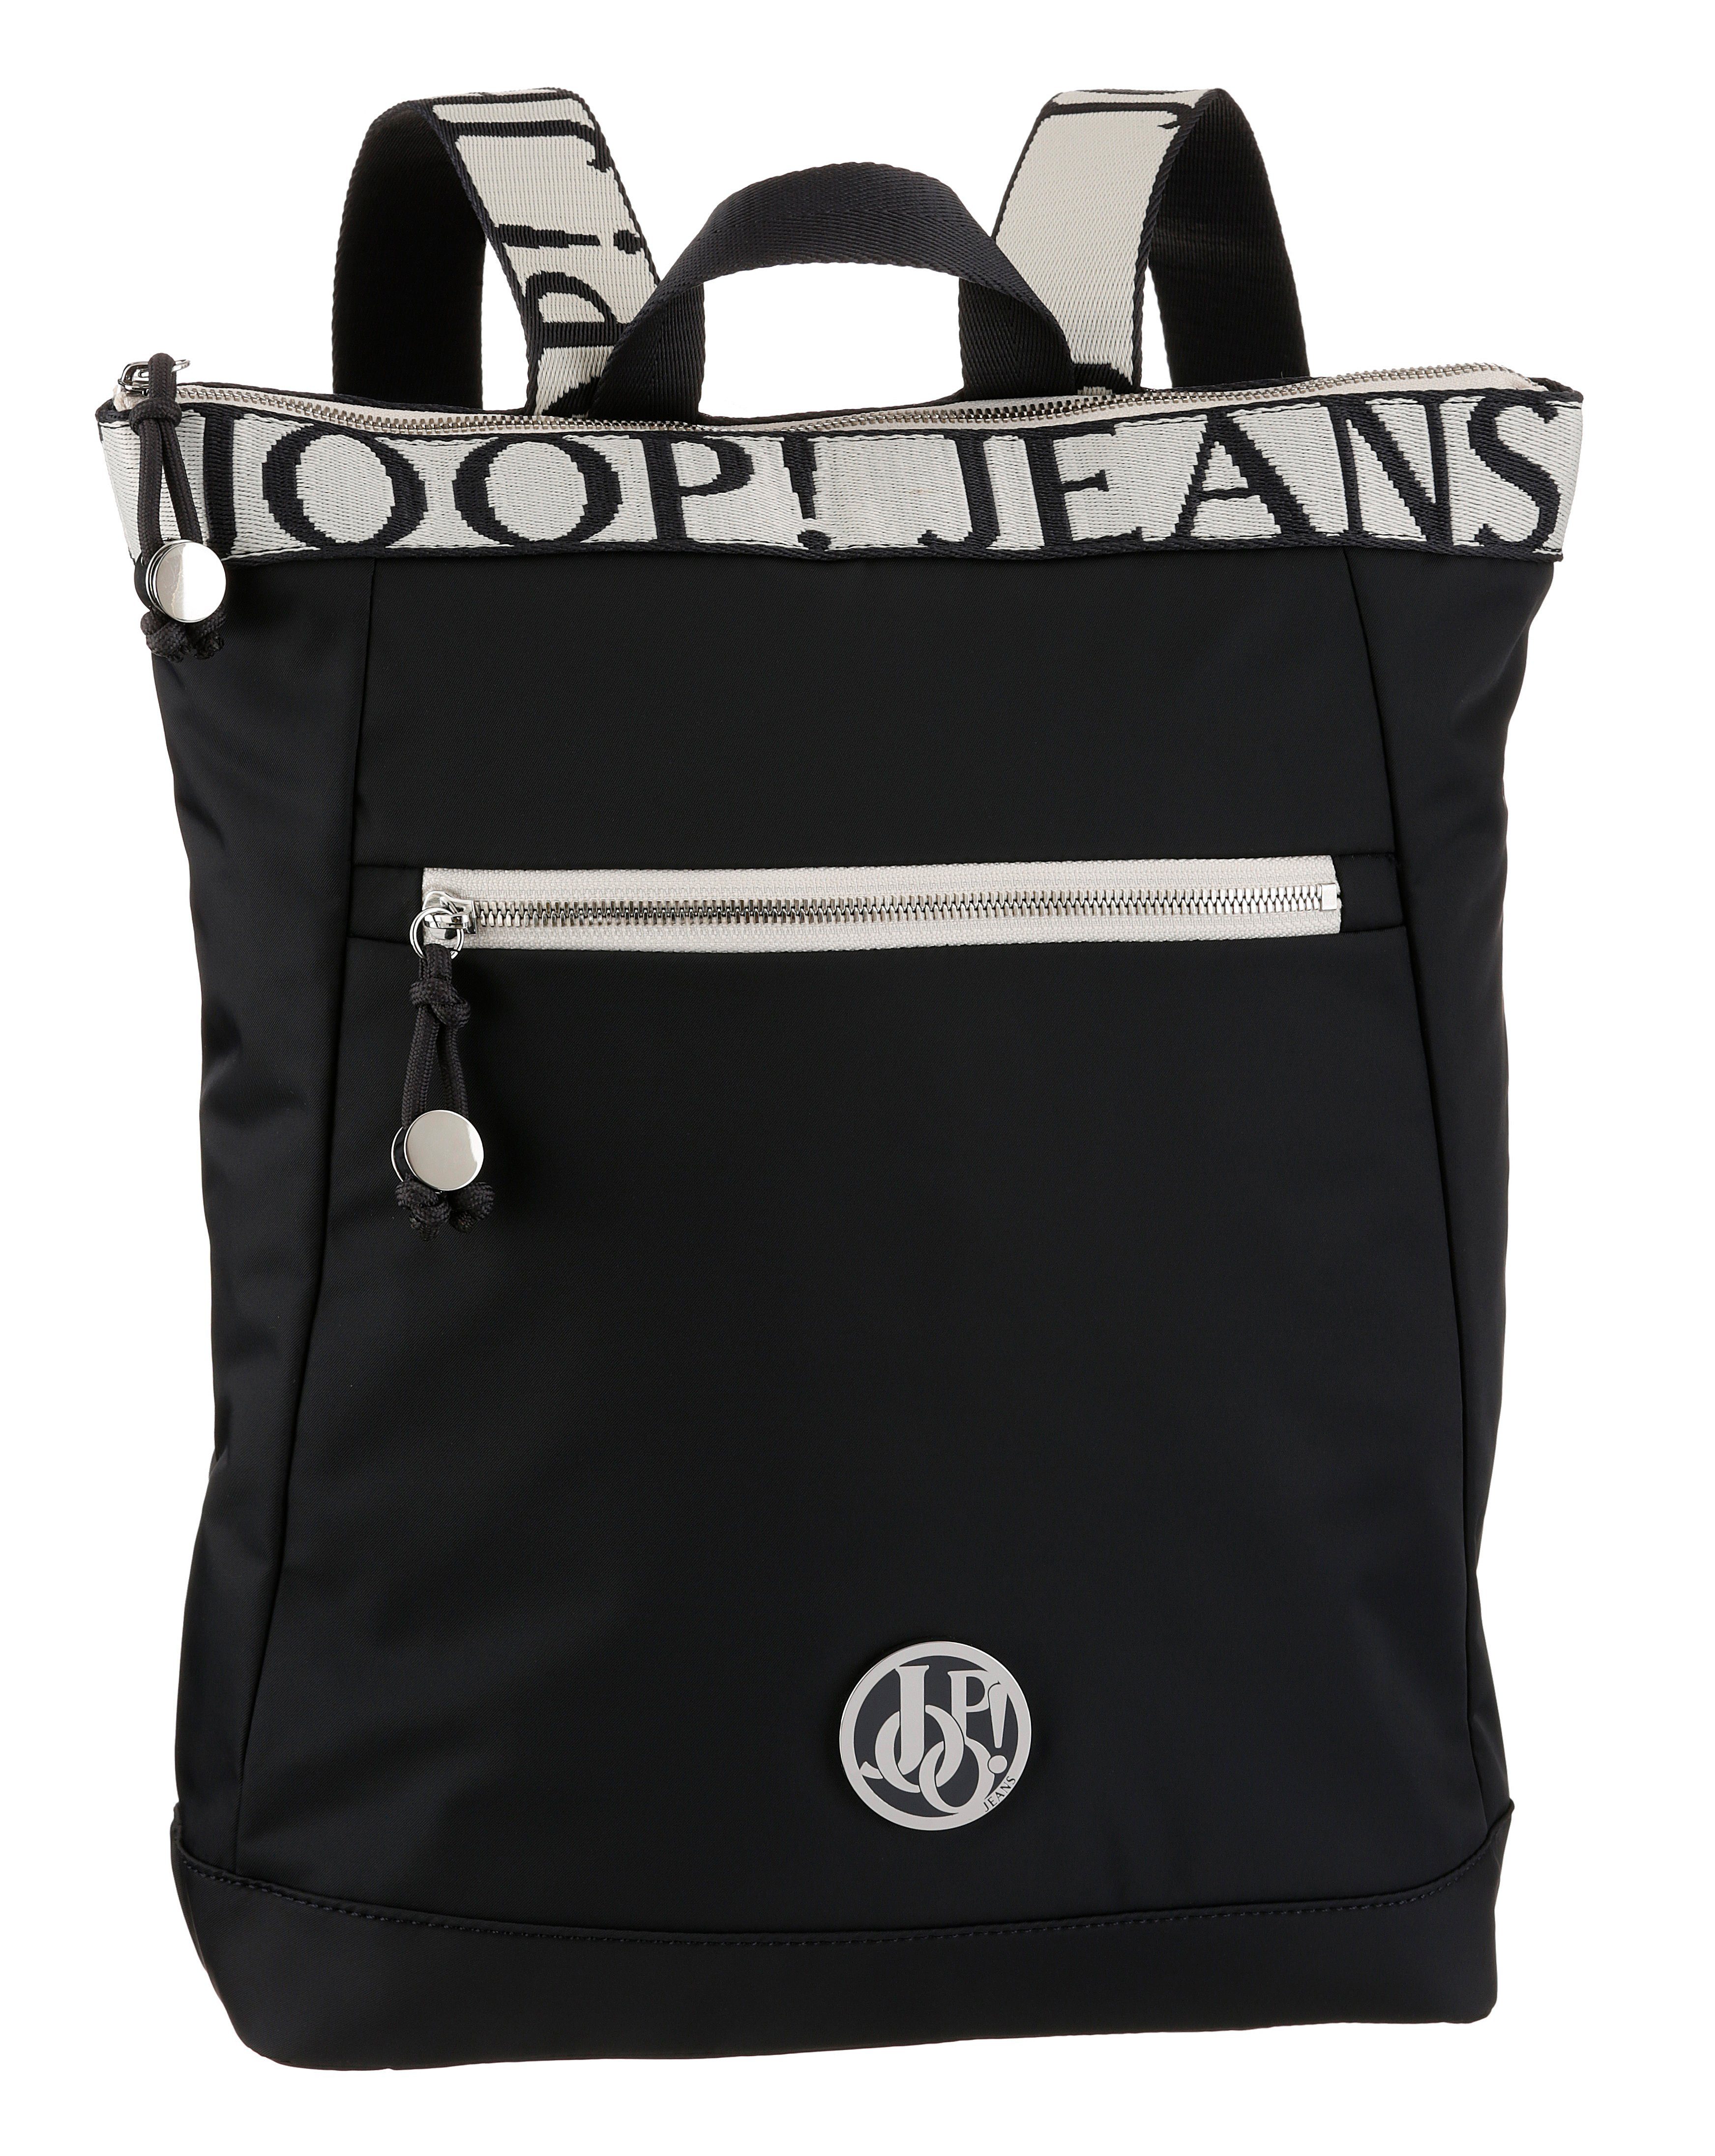 Joop Jeans Cityrucksack lietissimo elva backpack lvz, mit Logo Schriftzug auf den Trageriemen nightblue | 